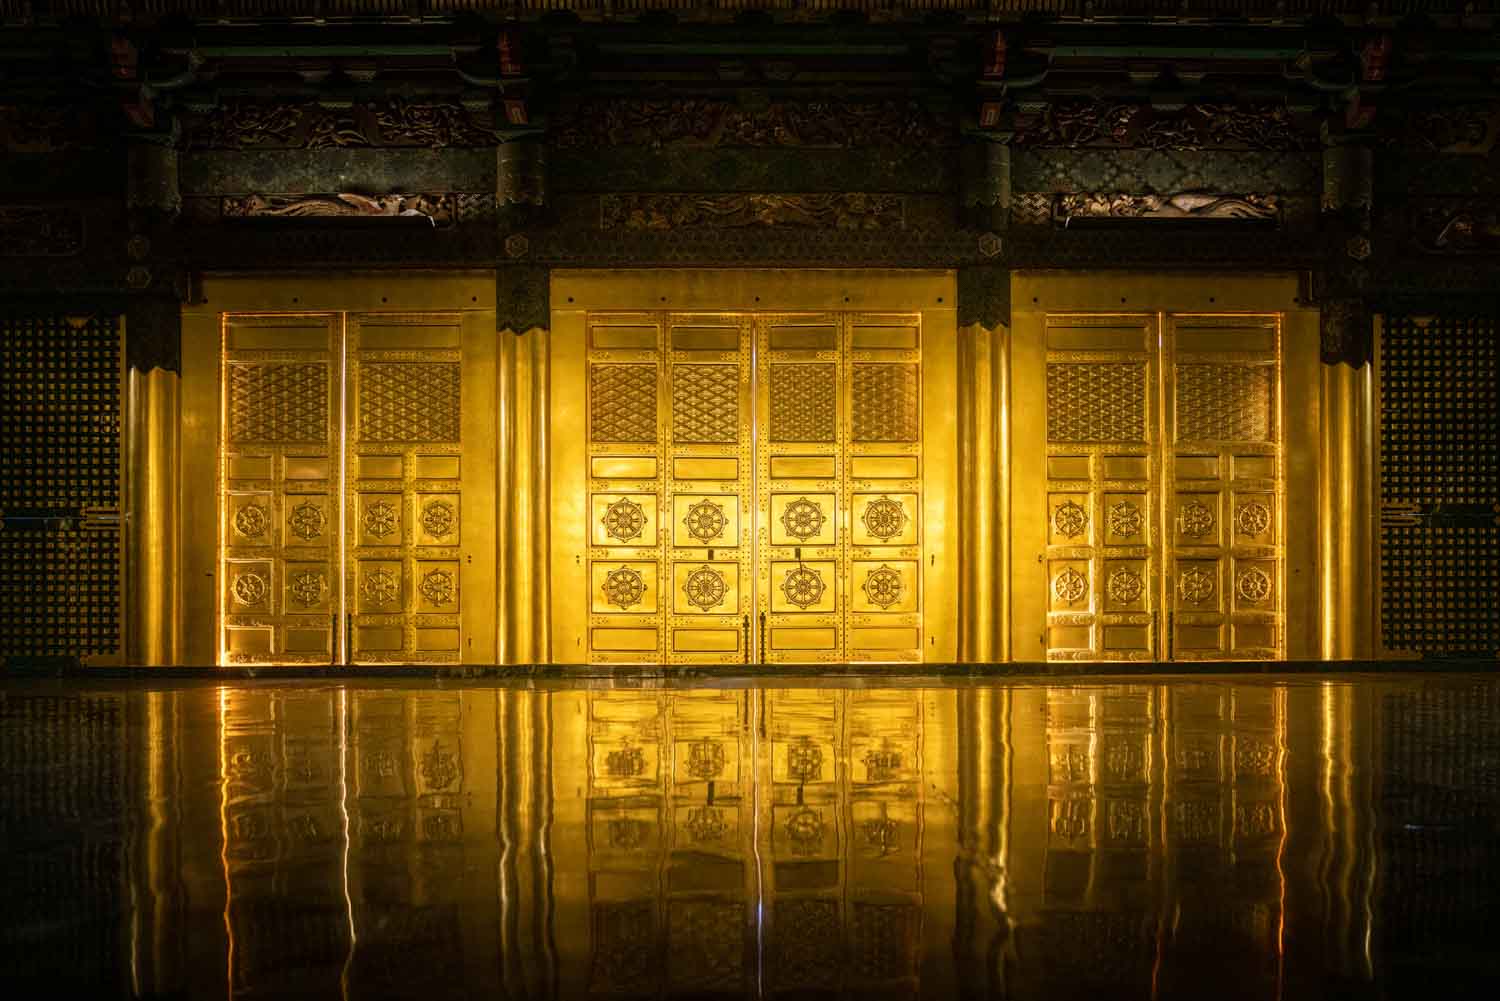 Inside the Ueno Toshogu Shrine